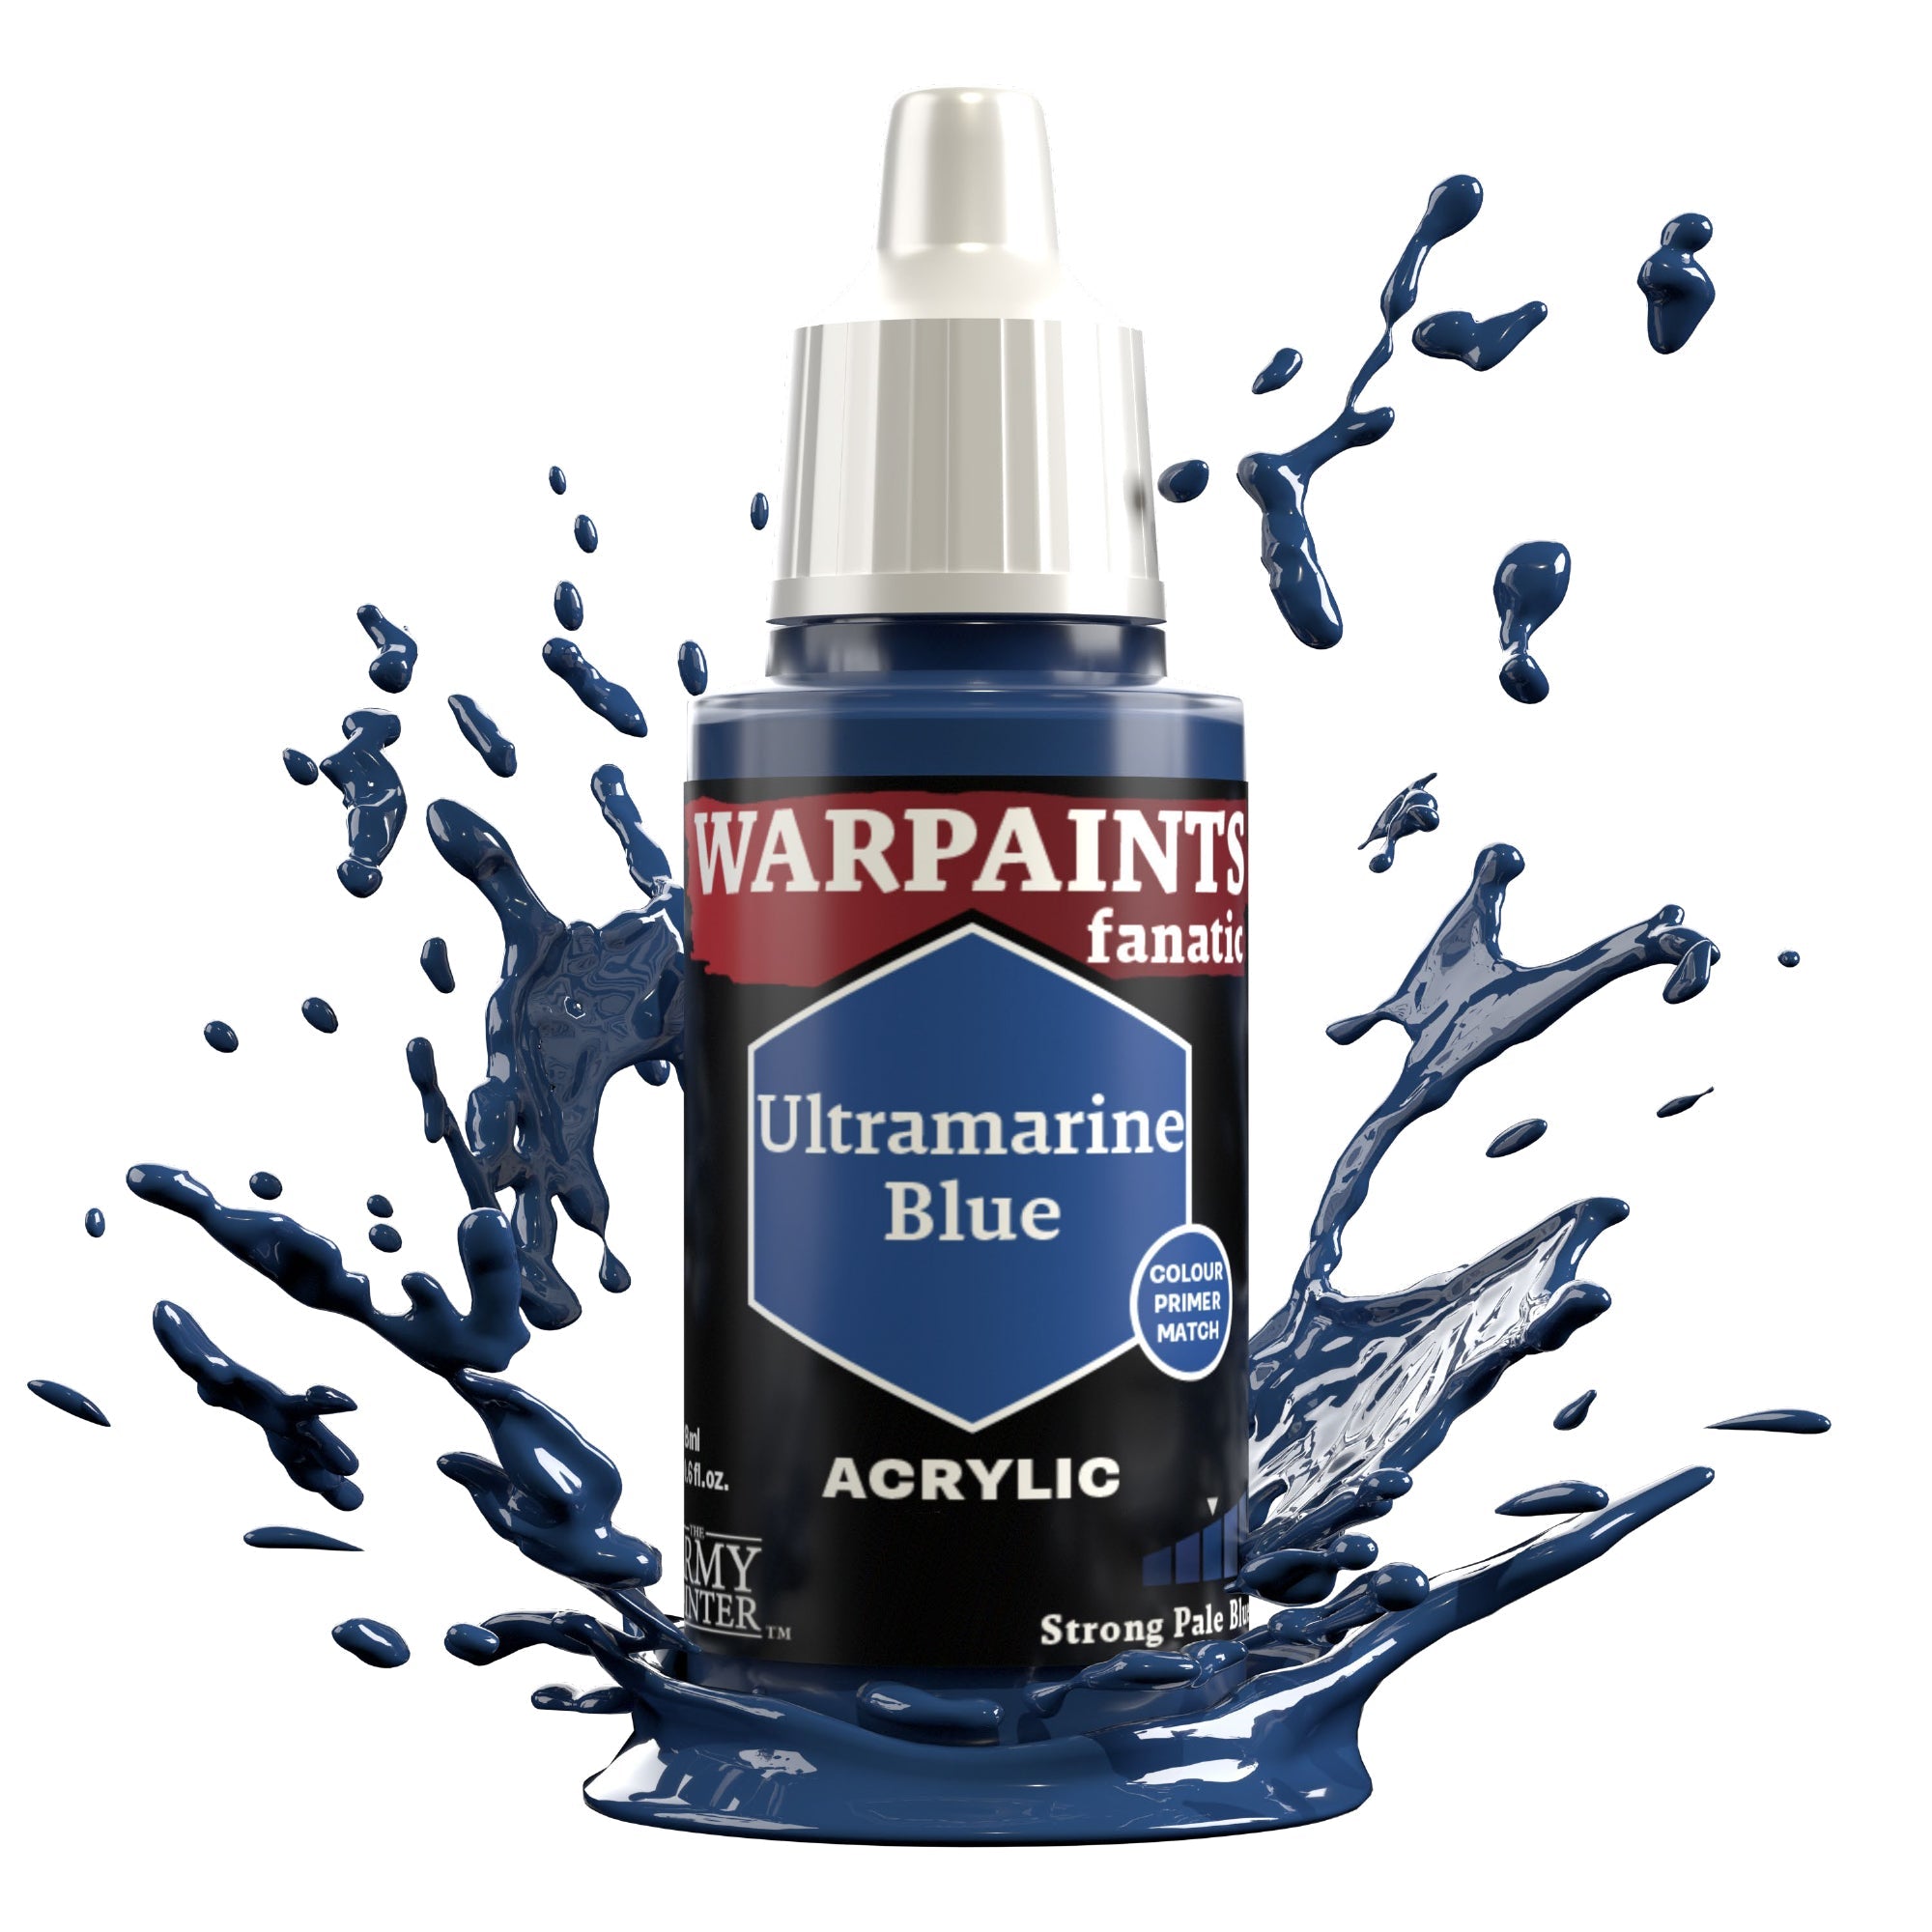 Warpaint Fanatics: Ultramarine Blue